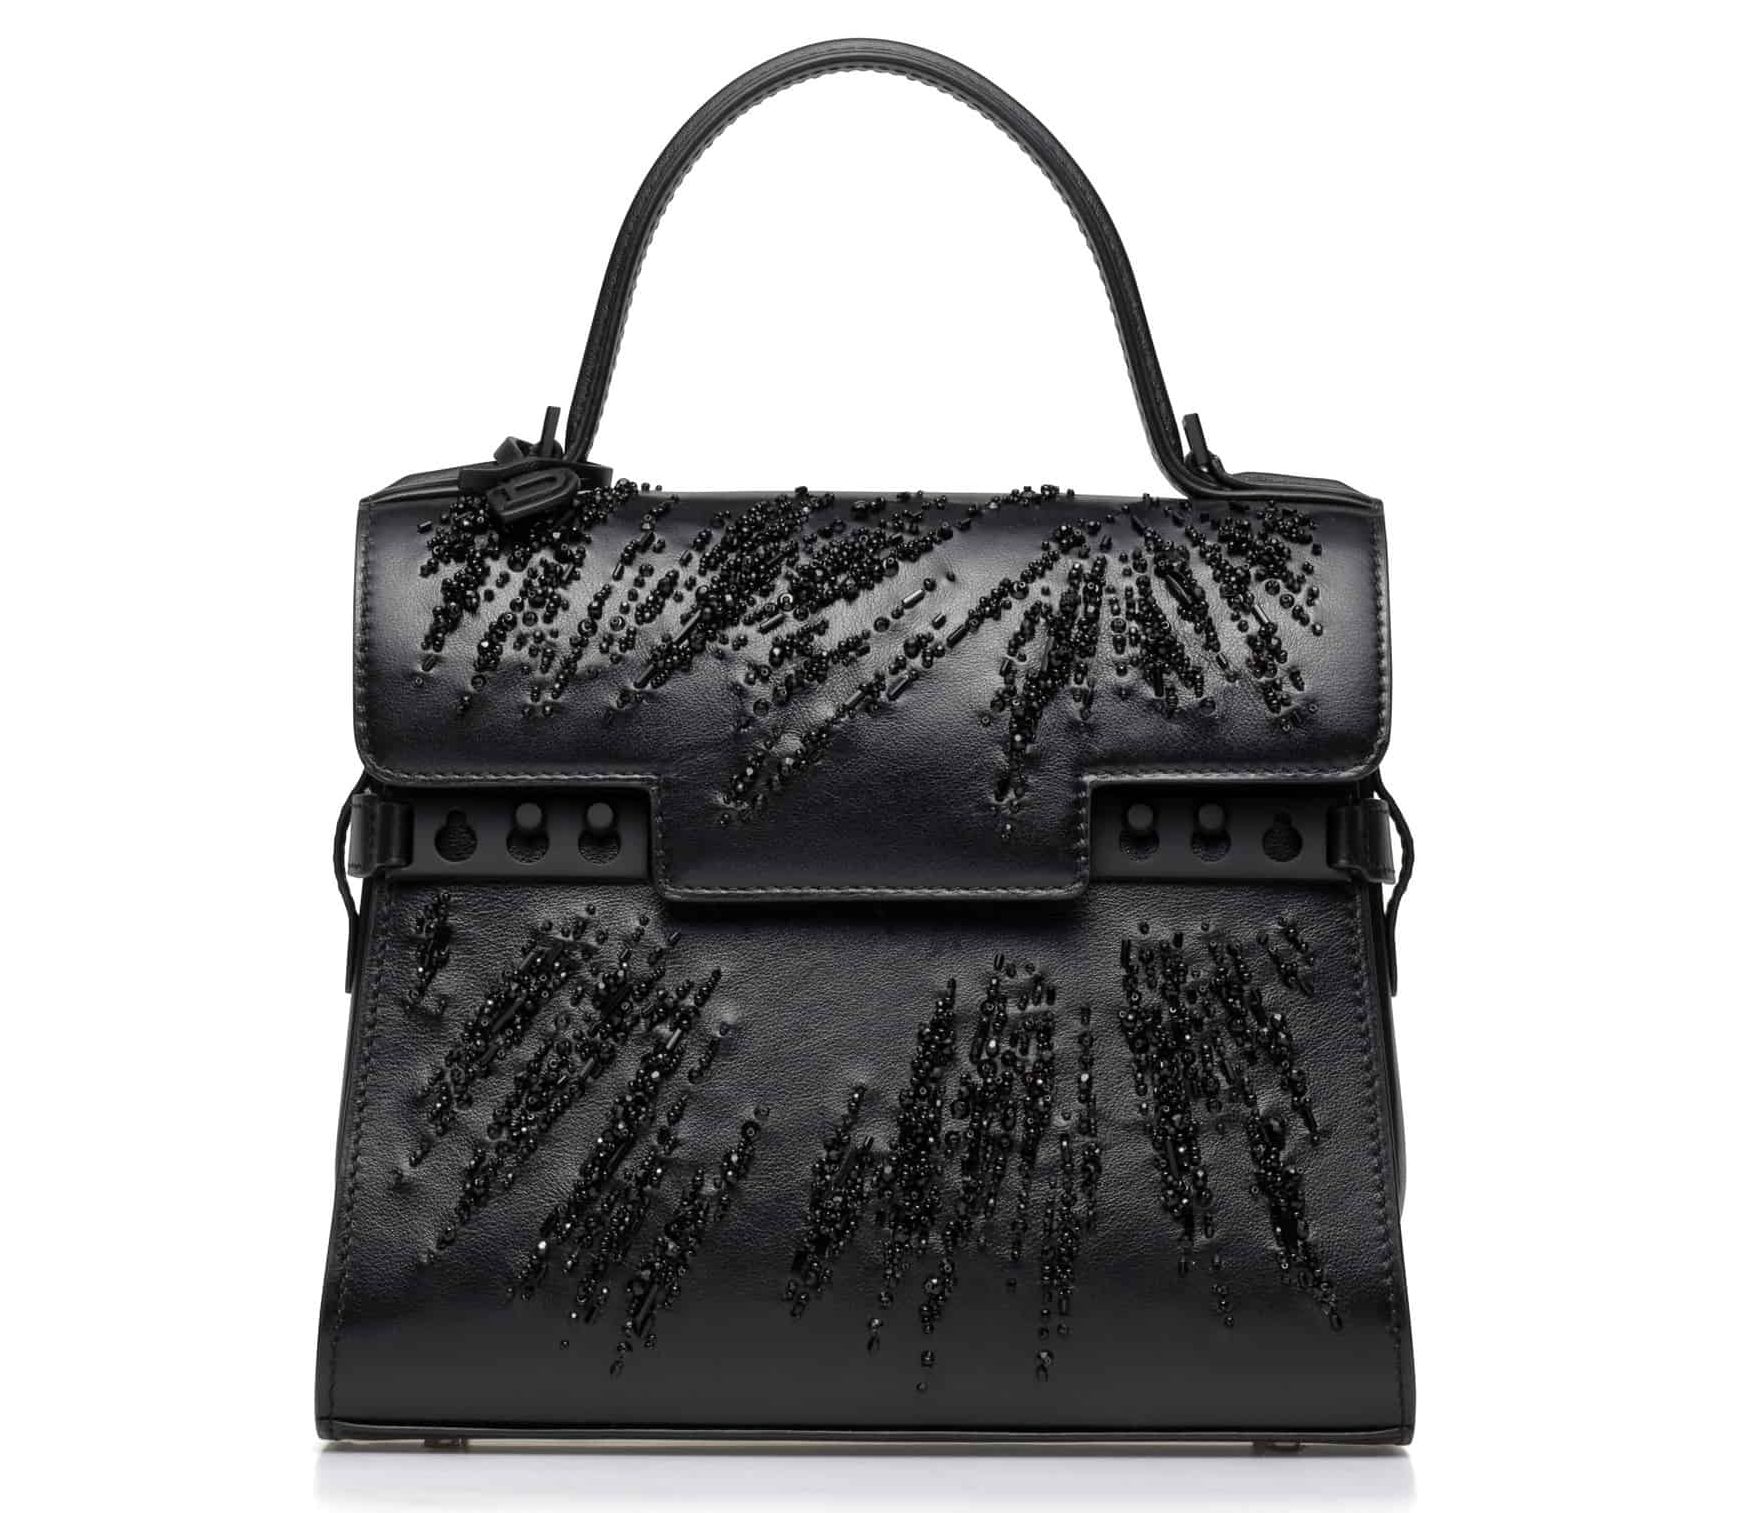 How luxury handbag label Delvaux, the 'Hermès of Belgium', made an